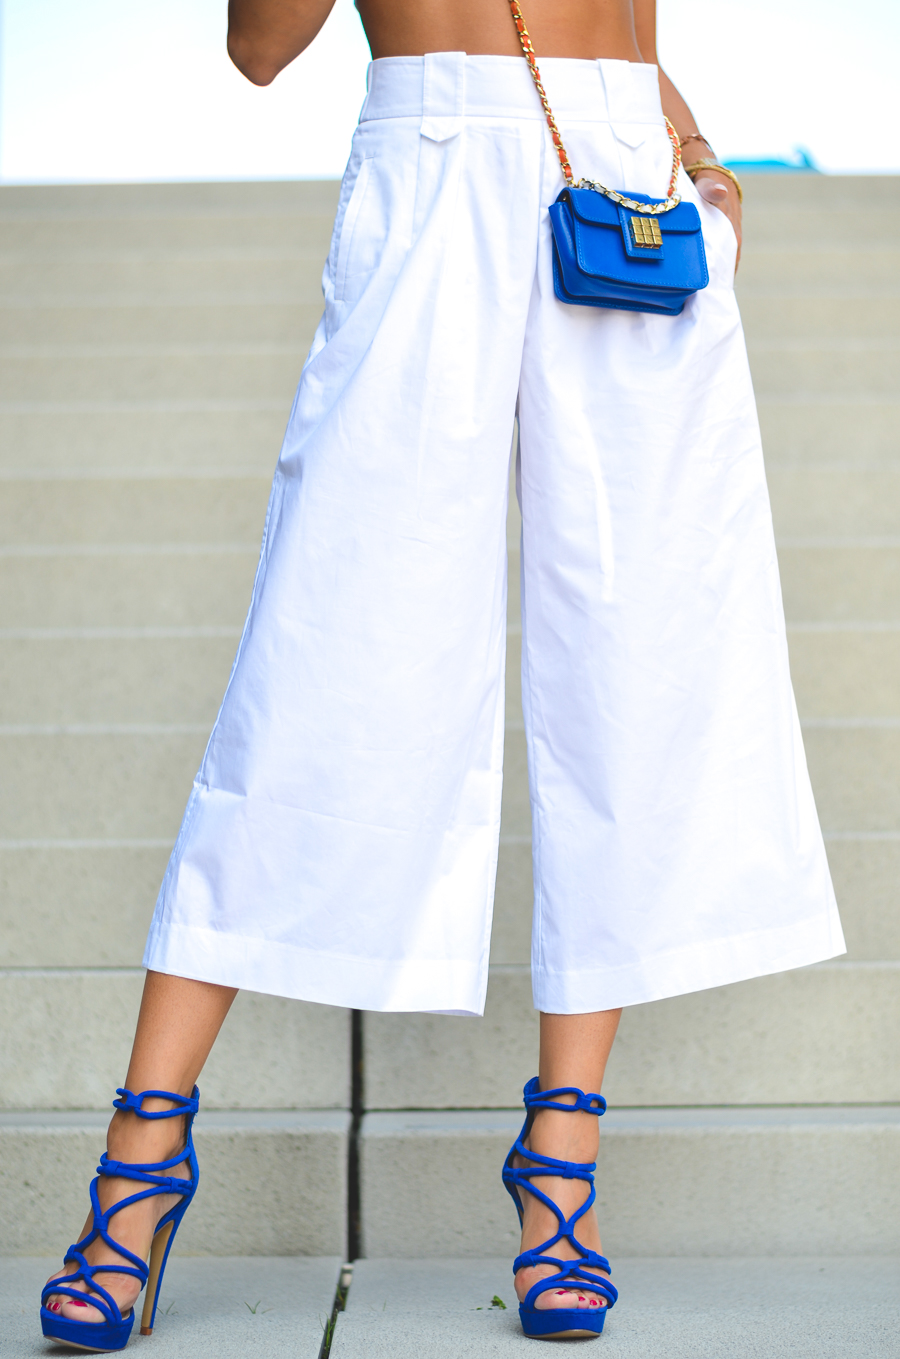 weisse culottes crop top blaue heels outfit style blog